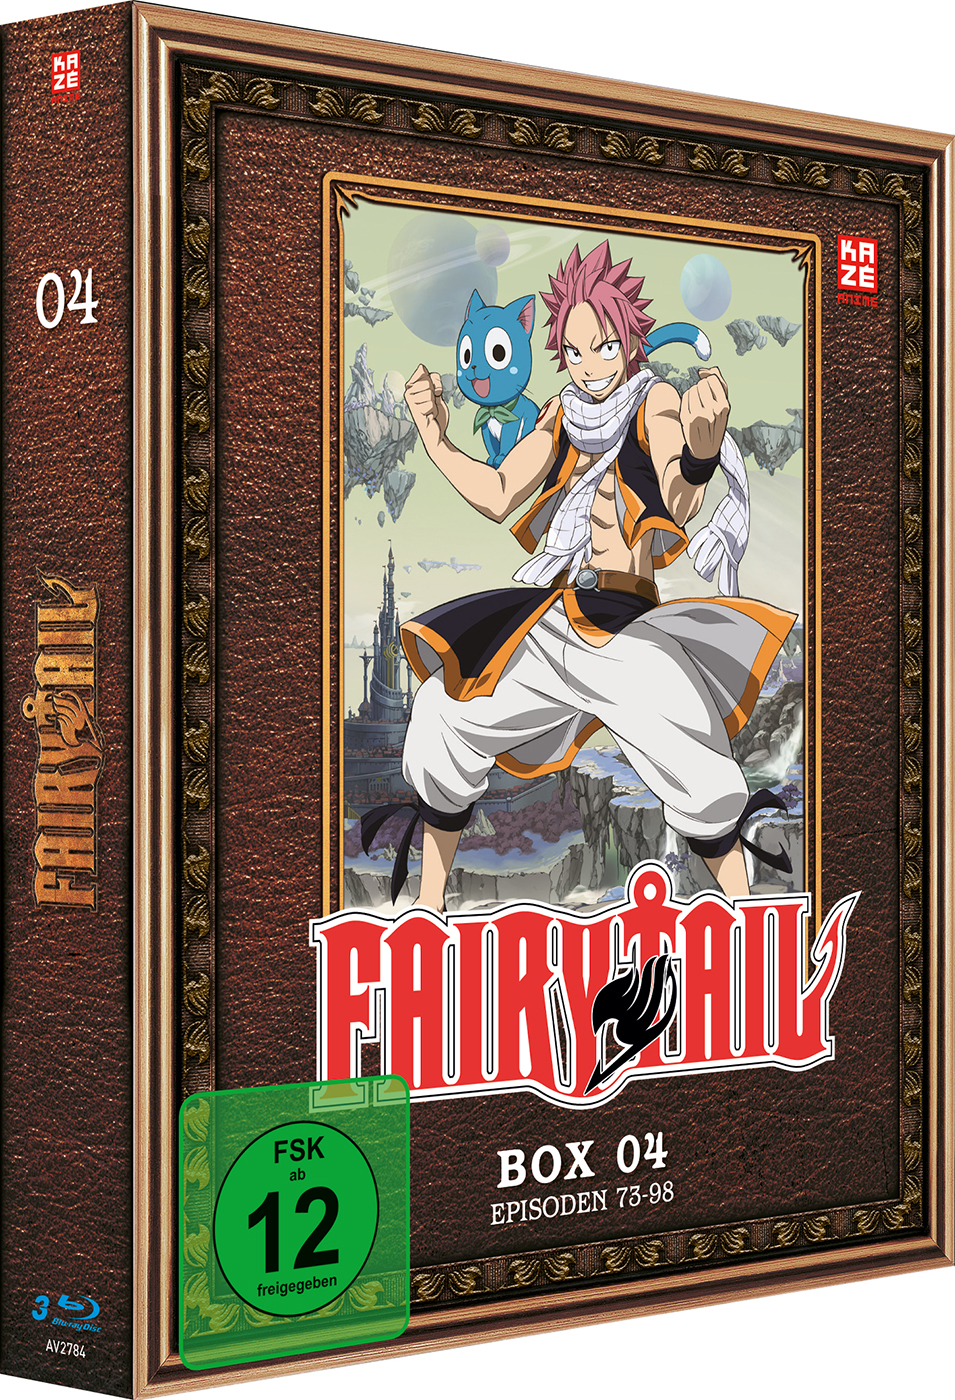 Fairy Tail 4 - 73-98) Box Blu-ray (Episoden